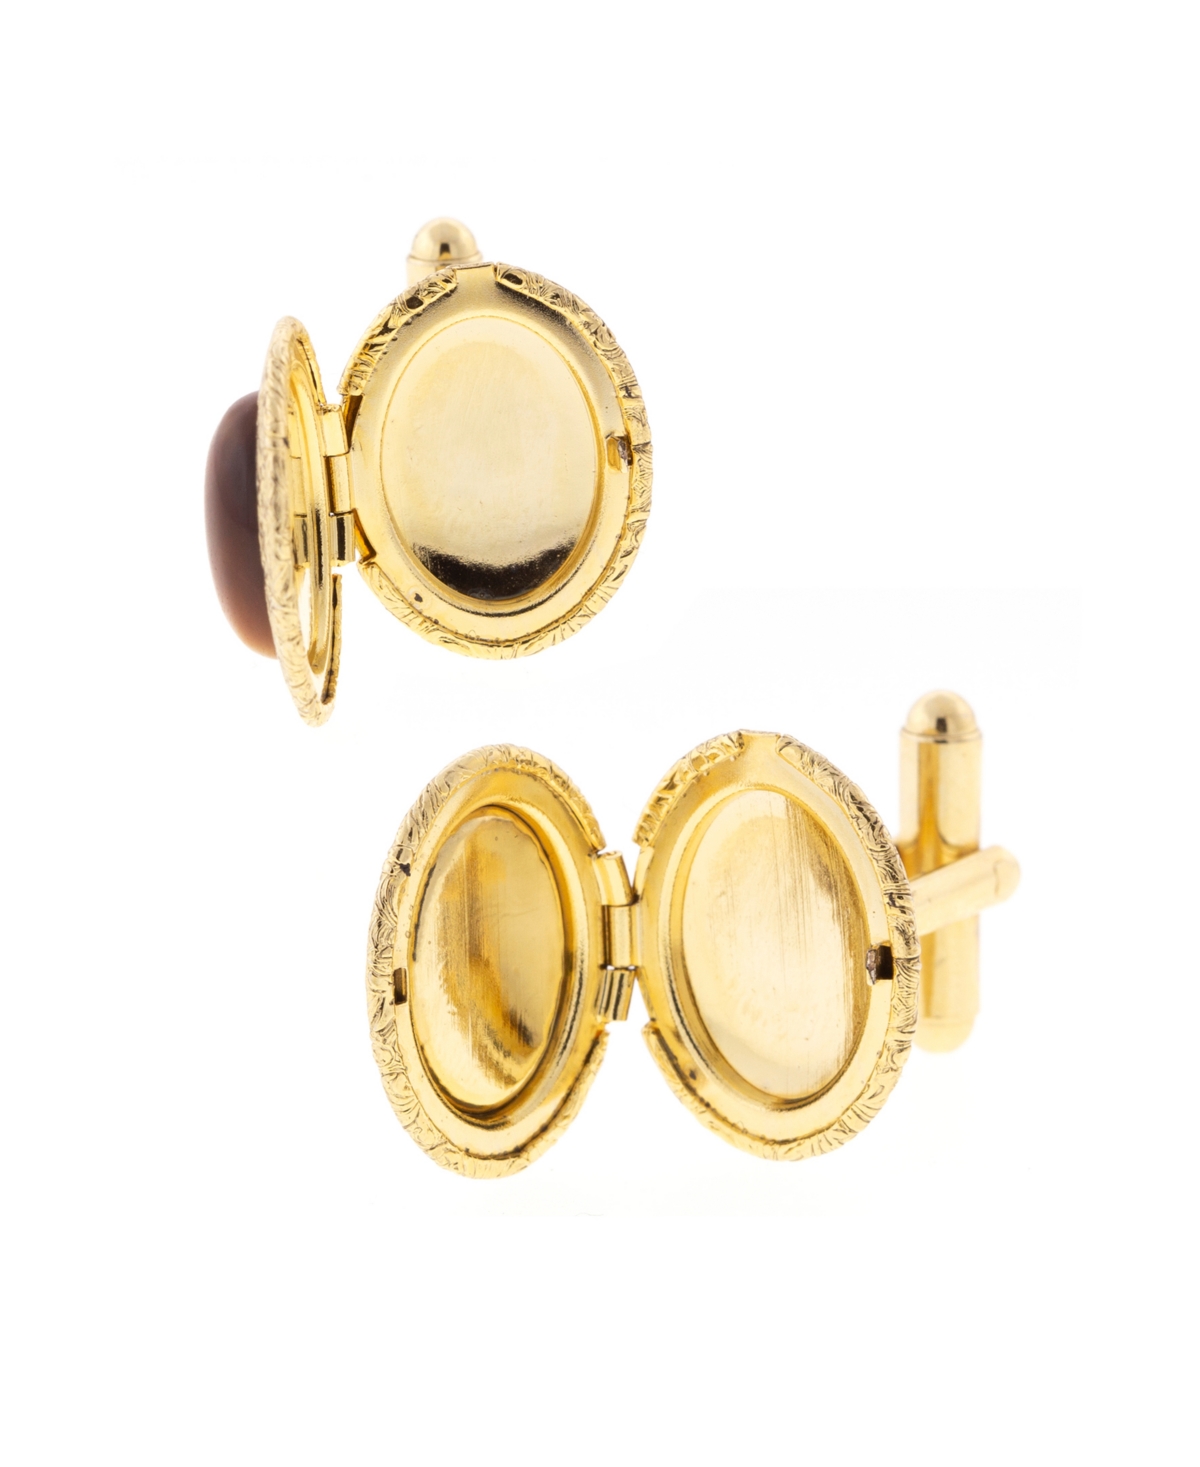 Jewelry 14K Gold Plated Tiger's Eye Oval Locket Cufflinks - Brown